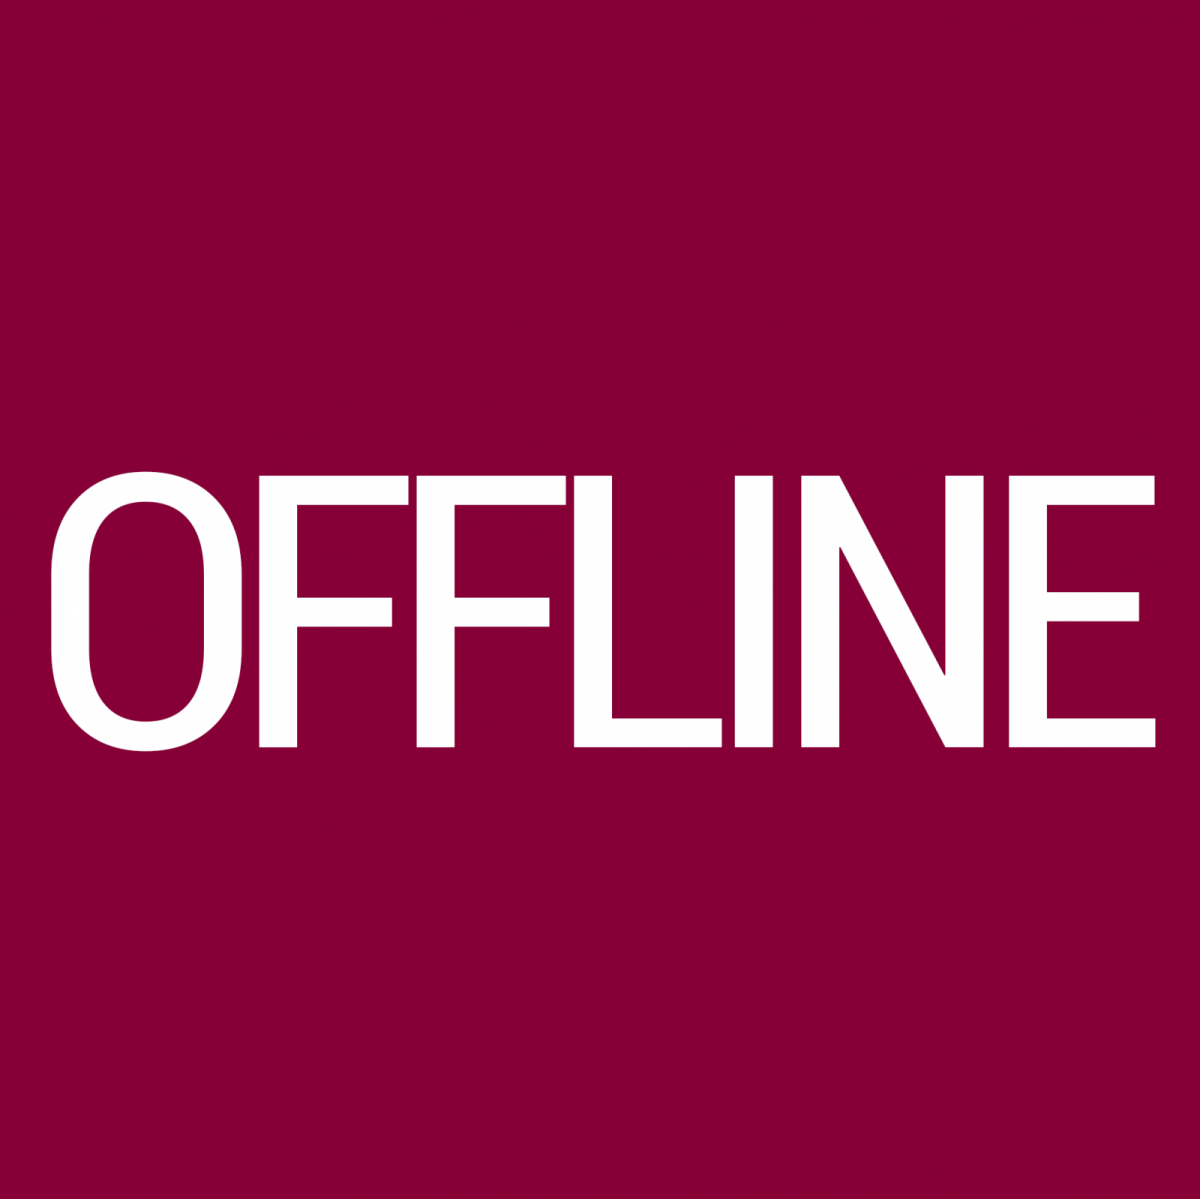 Offline auth. Офлайн. Логотип offline. Надпись оффлайн. Offline логотип офлайн.